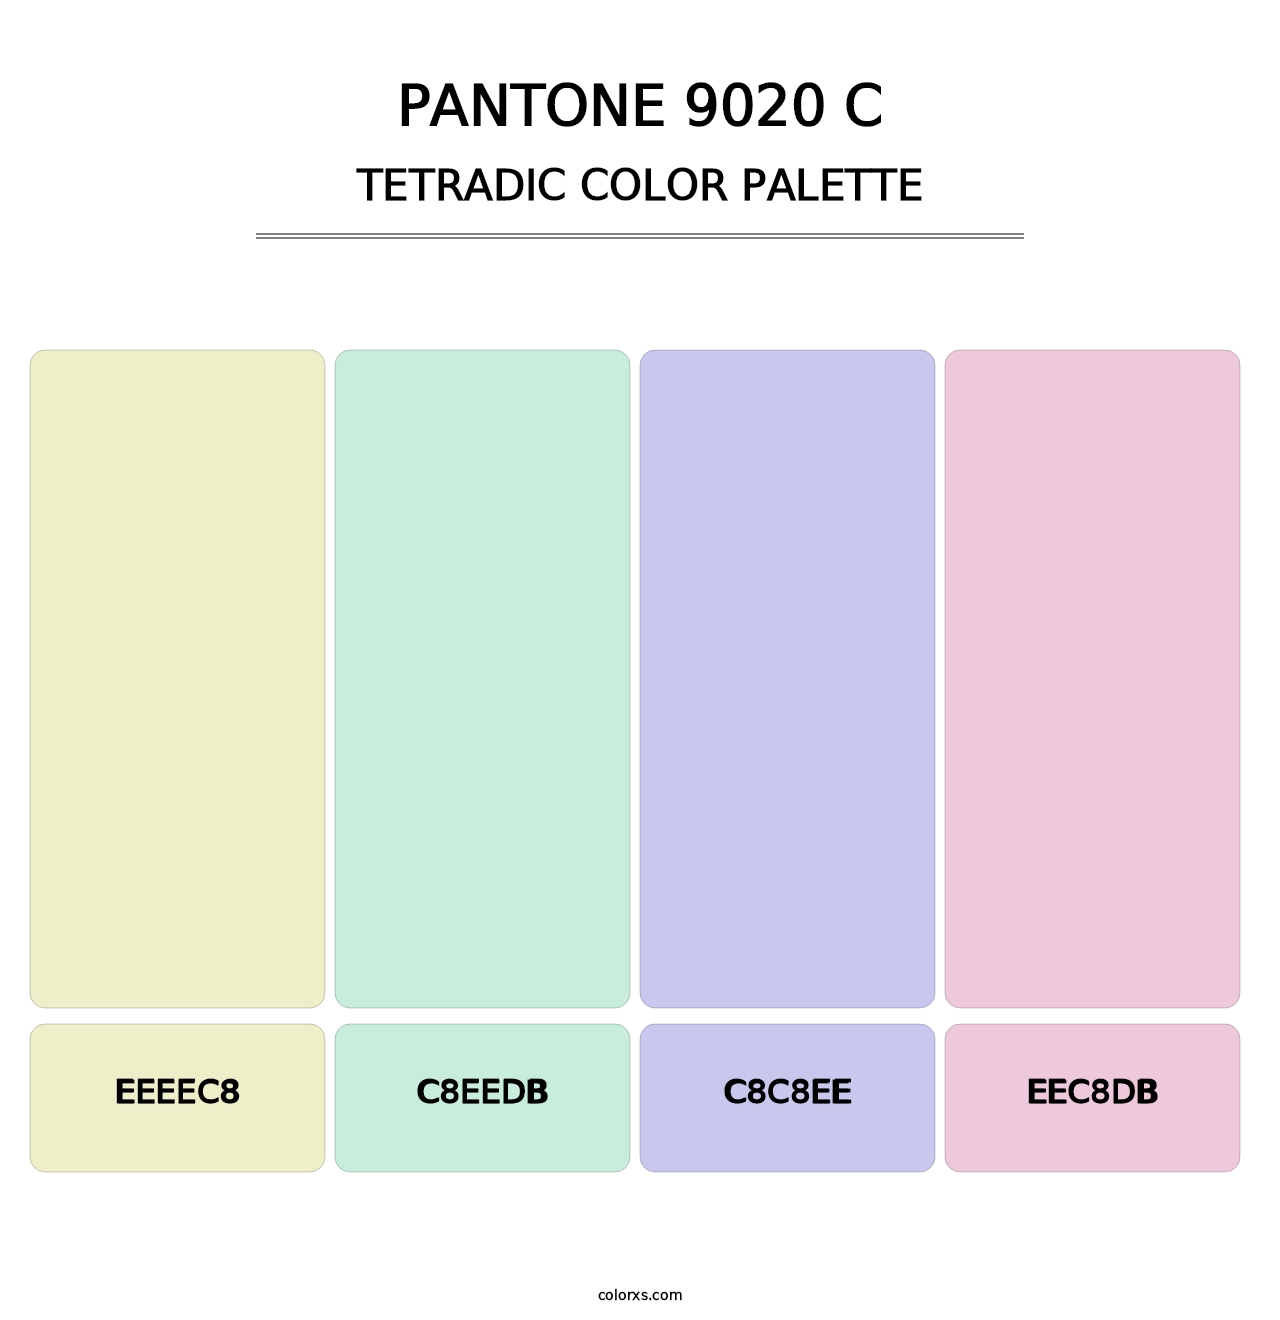 PANTONE 9020 C - Tetradic Color Palette